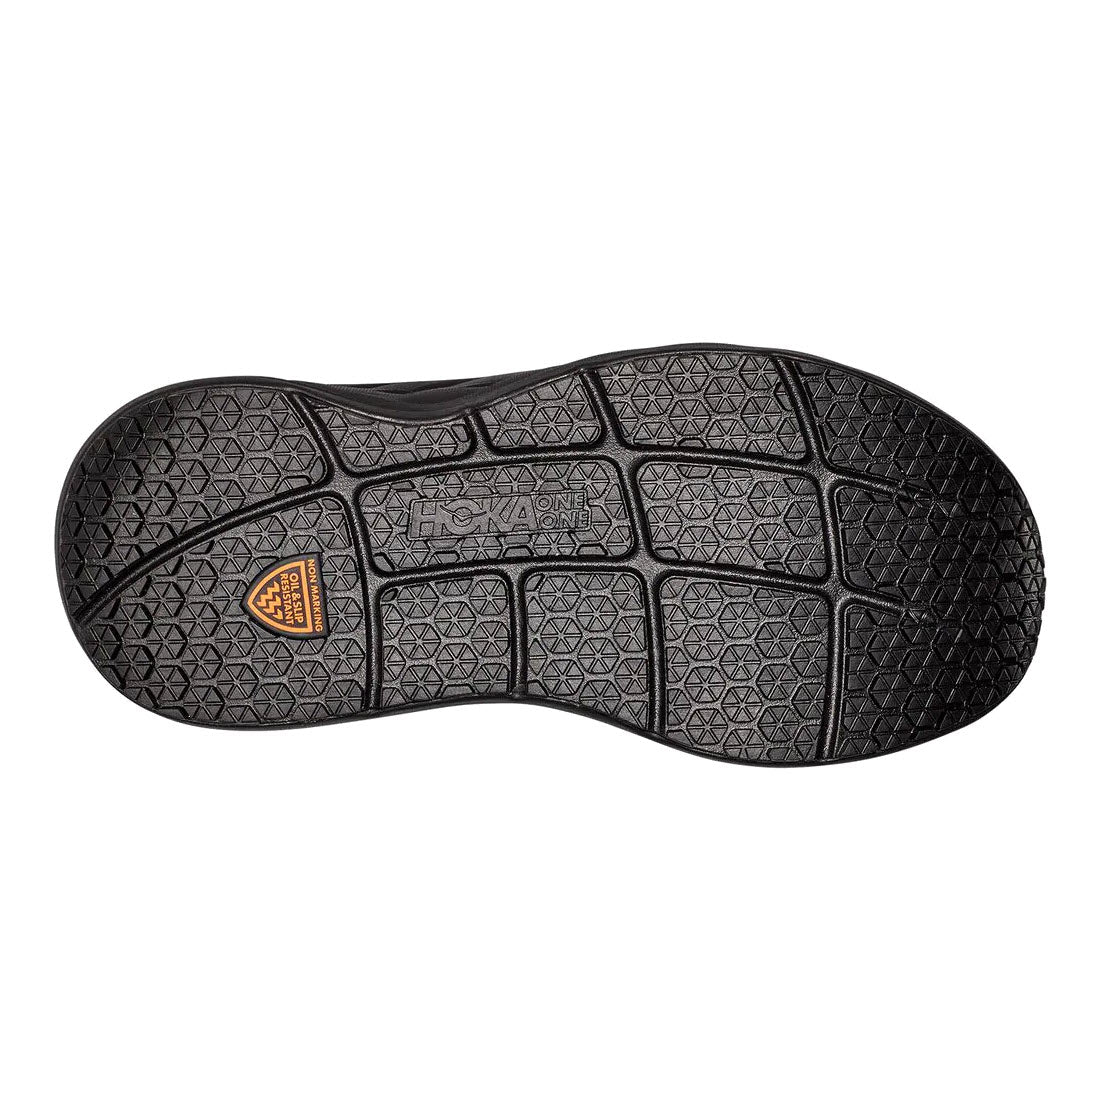 HOKA BONDI LEATHER SLIP RESISTANT BLACK slip-resistant walking shoe sole with textured pattern and Hoka brand logo.